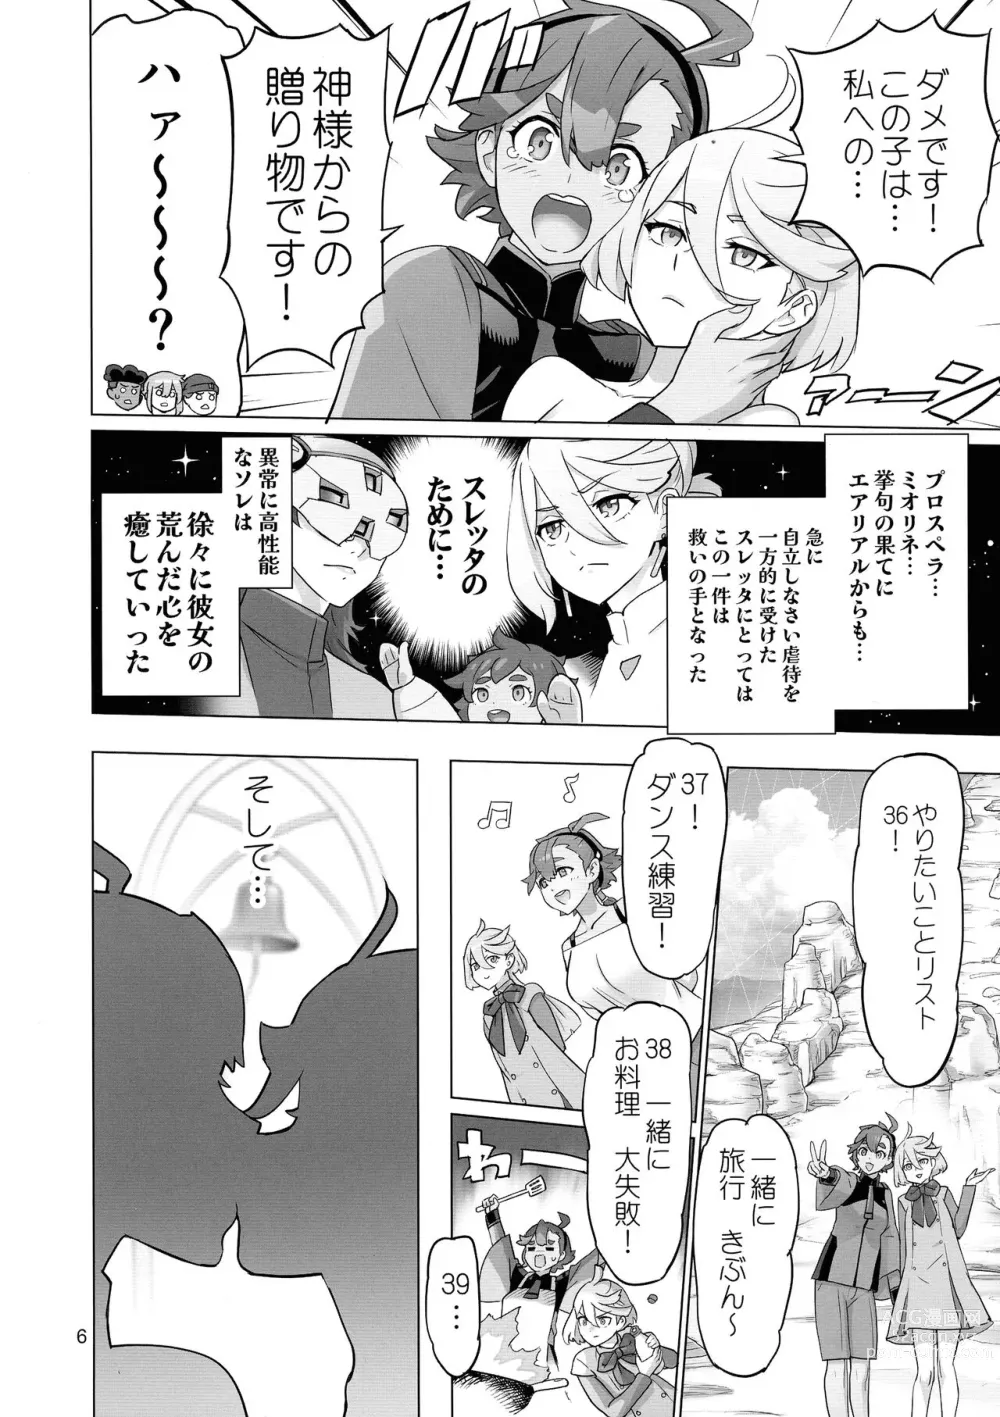 Page 6 of doujinshi M3AON